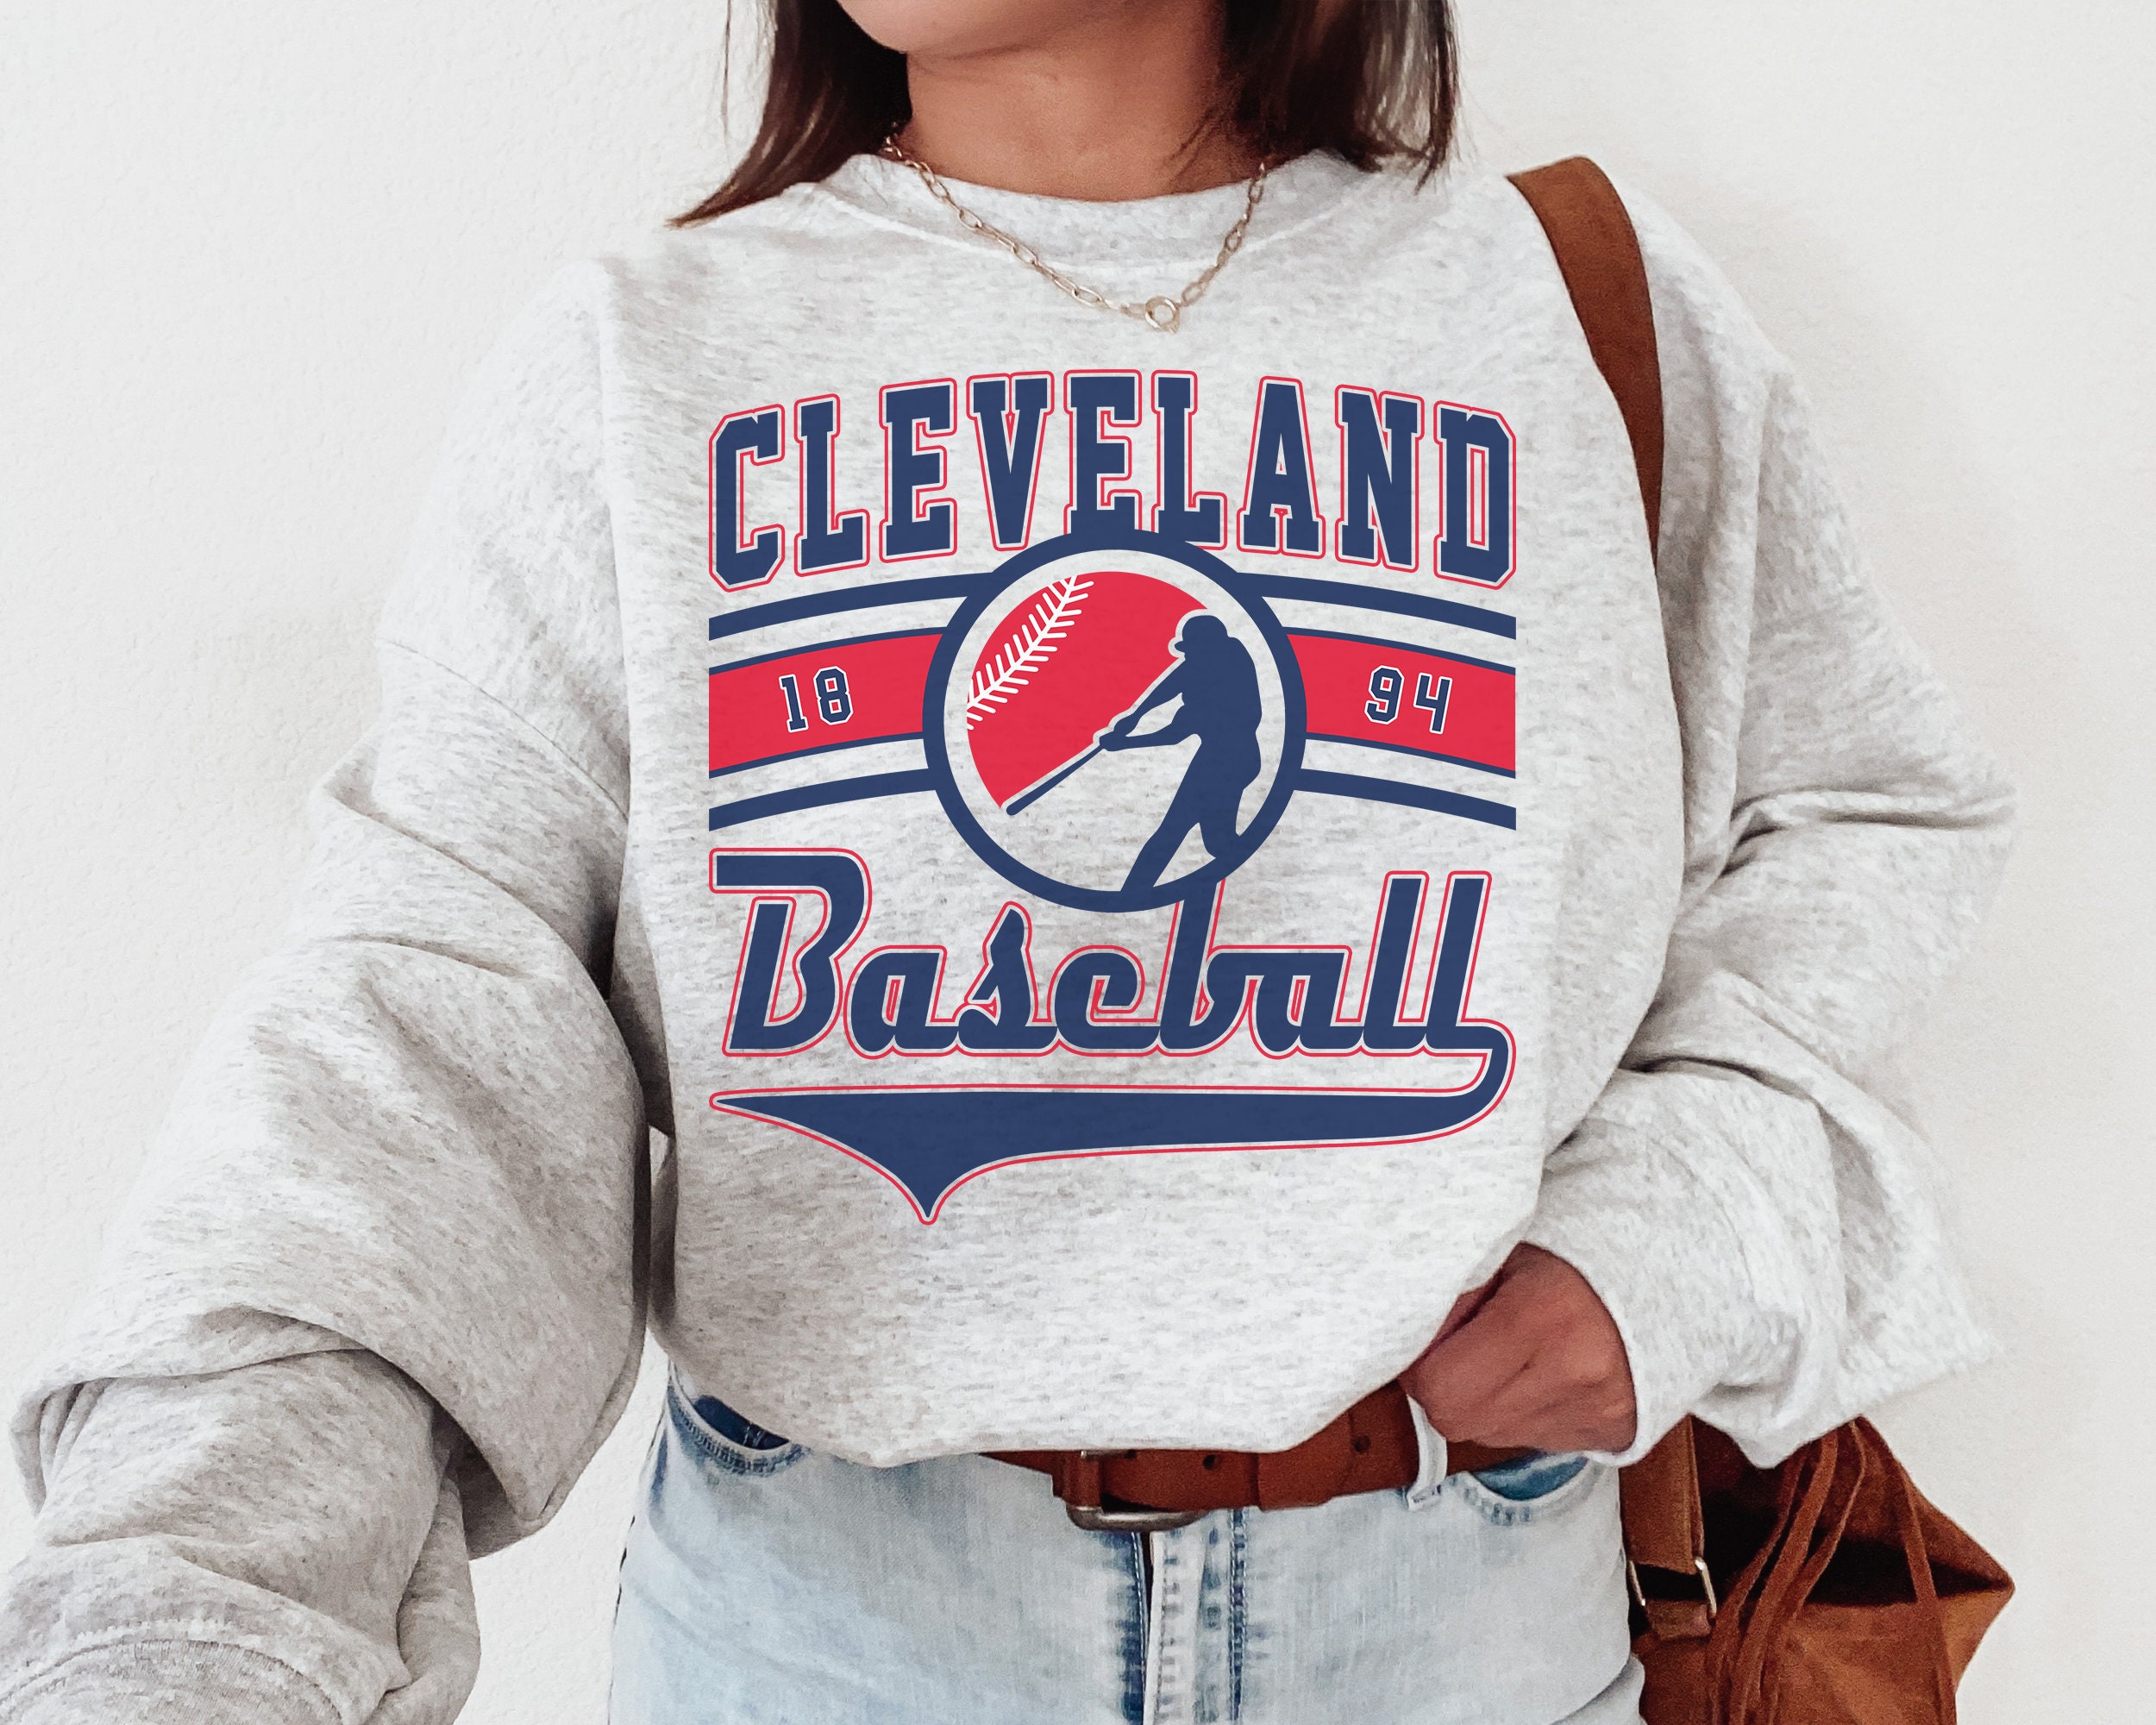 Vintage Cleveland Guardian Crewneck Sweatshirt / T-shirt 